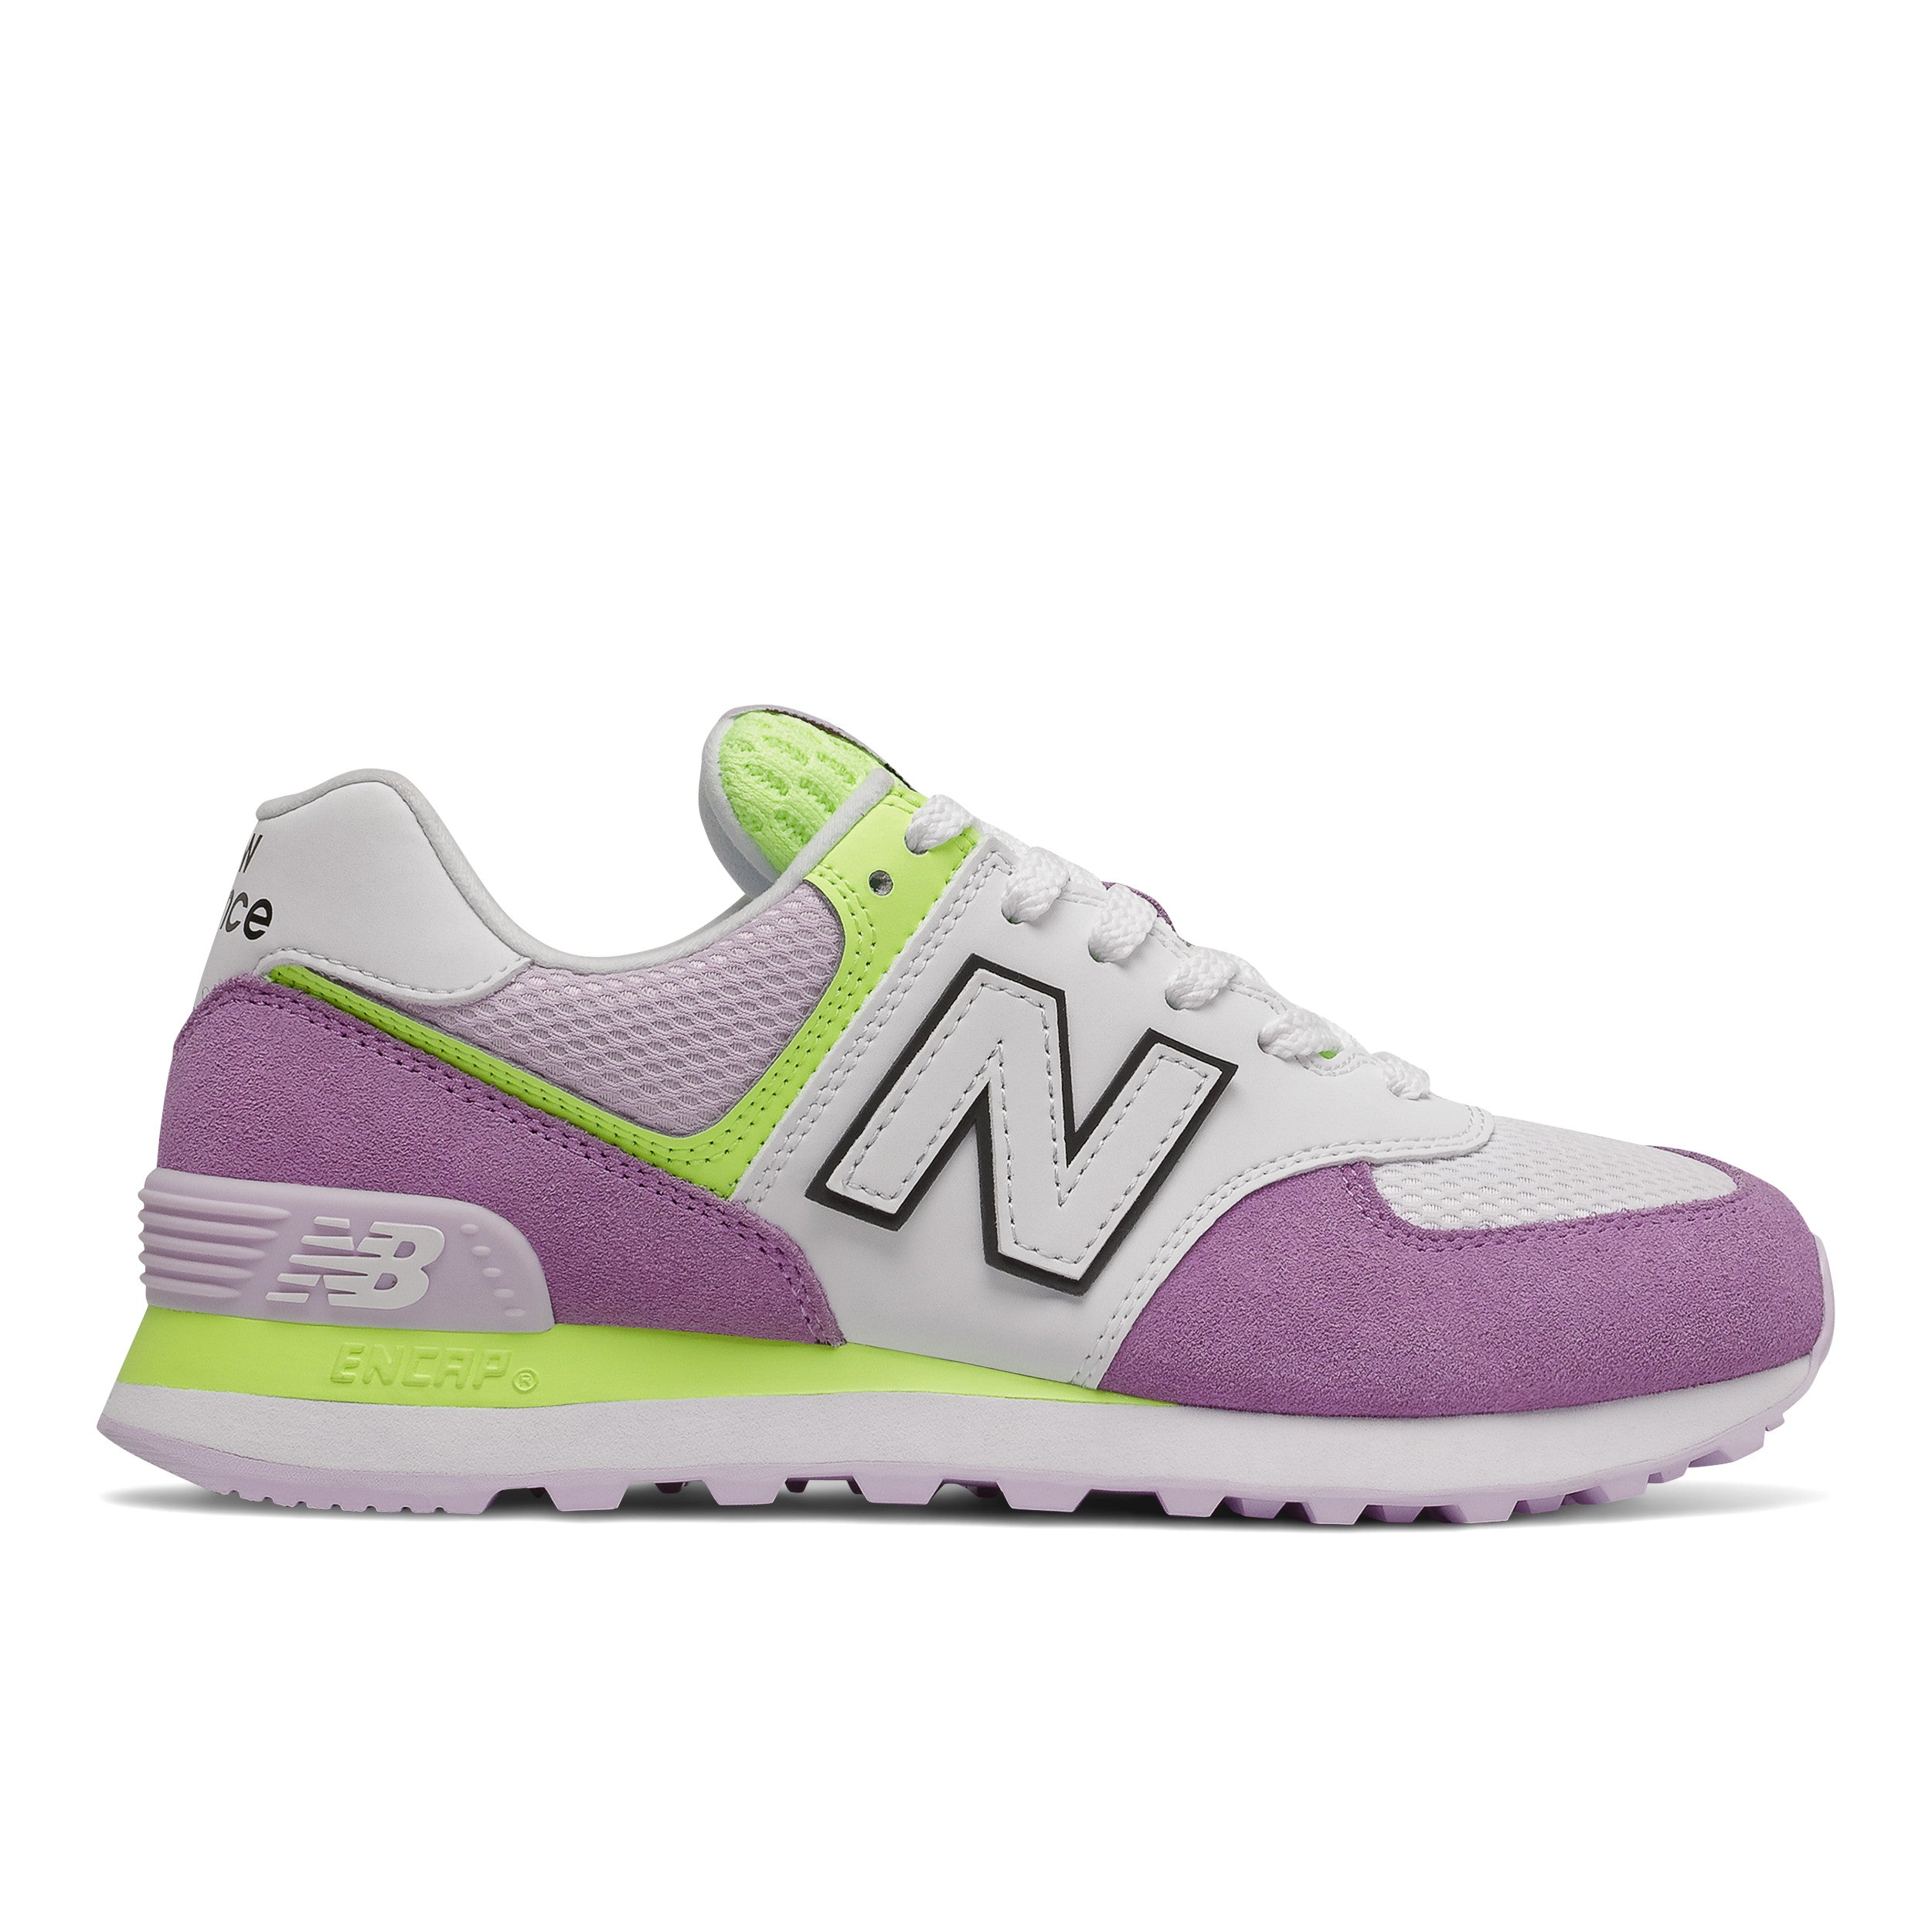 New Balance Women’s Tennis Shoes -  WL574GY2